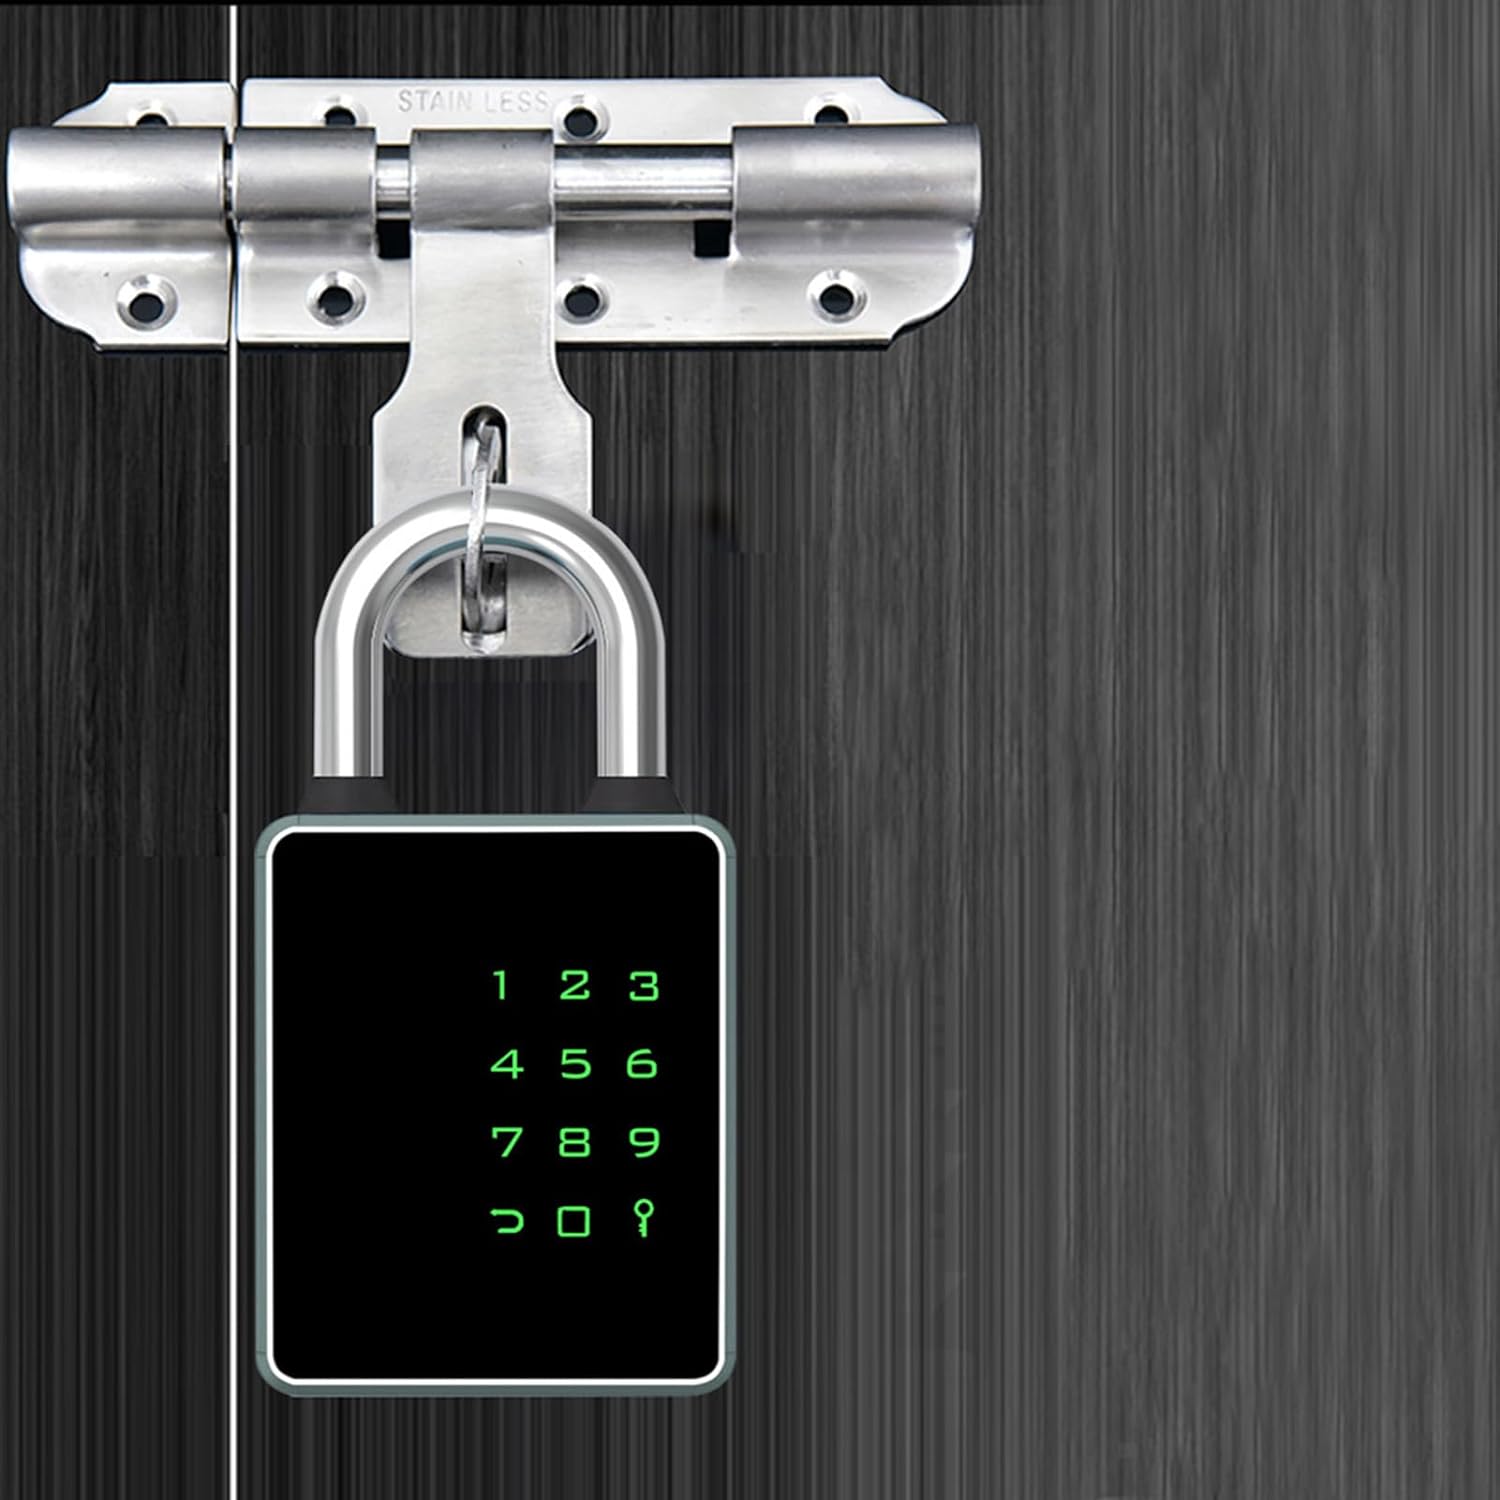 Fingerprint Padlock, Smart Padlock Keyless Password for Home Gate Gym Outdoor School Locker, Lock for Locker with Key Card and Fingerprint Unlock